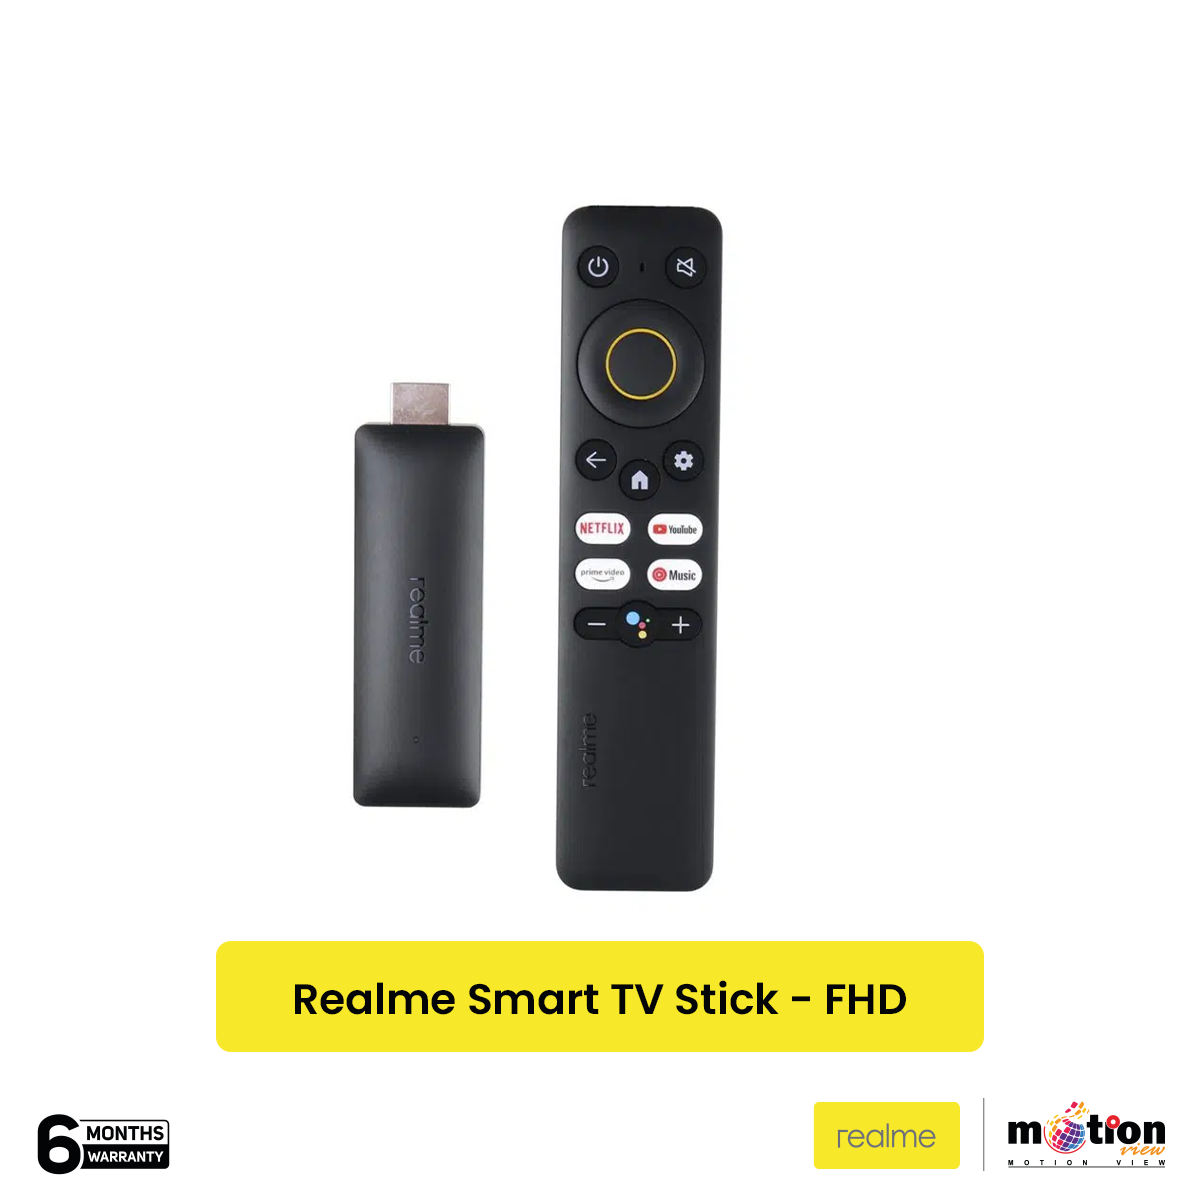 Realme Smart TV Stick - FHD Price in Bangladesh - Motion View